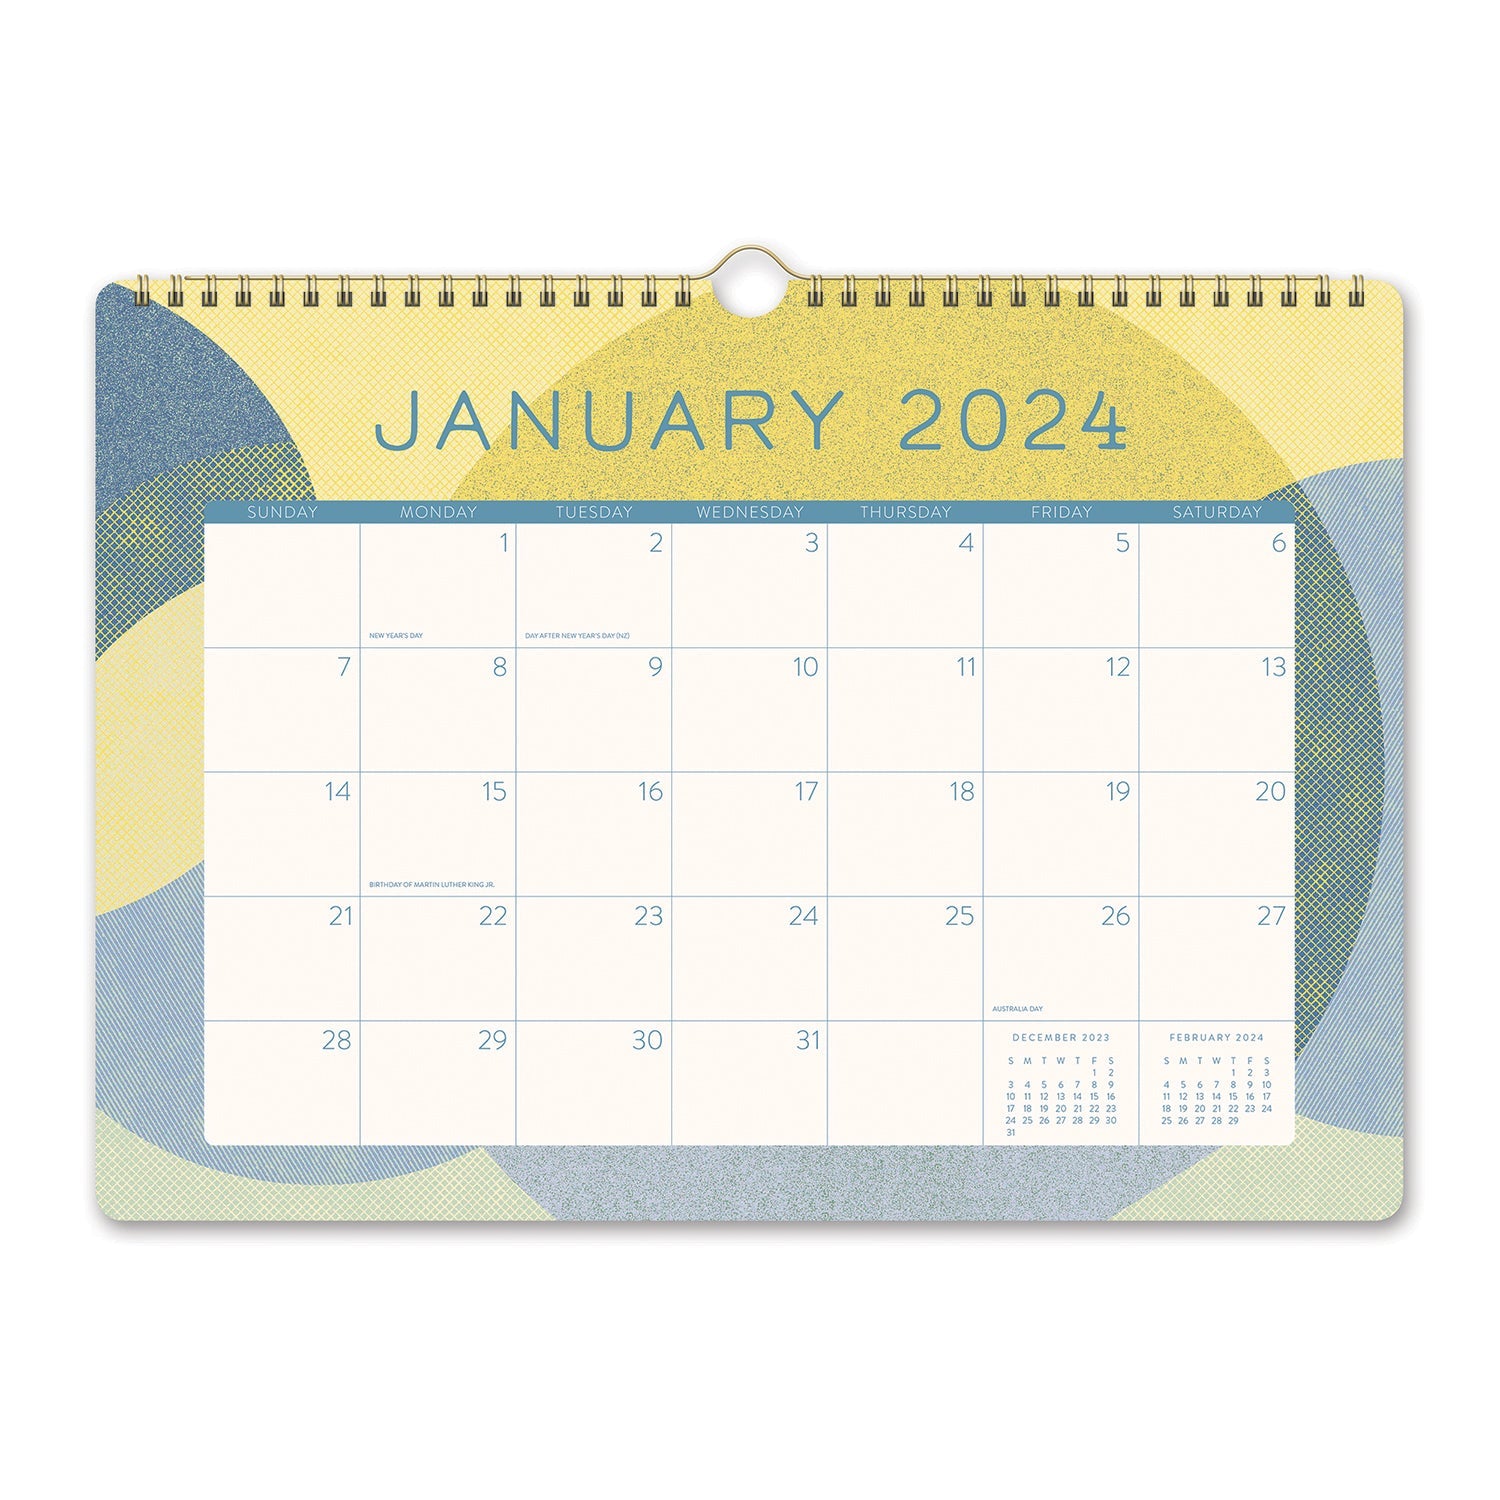 2024 Find Balance - Deluxe Wall Calendar